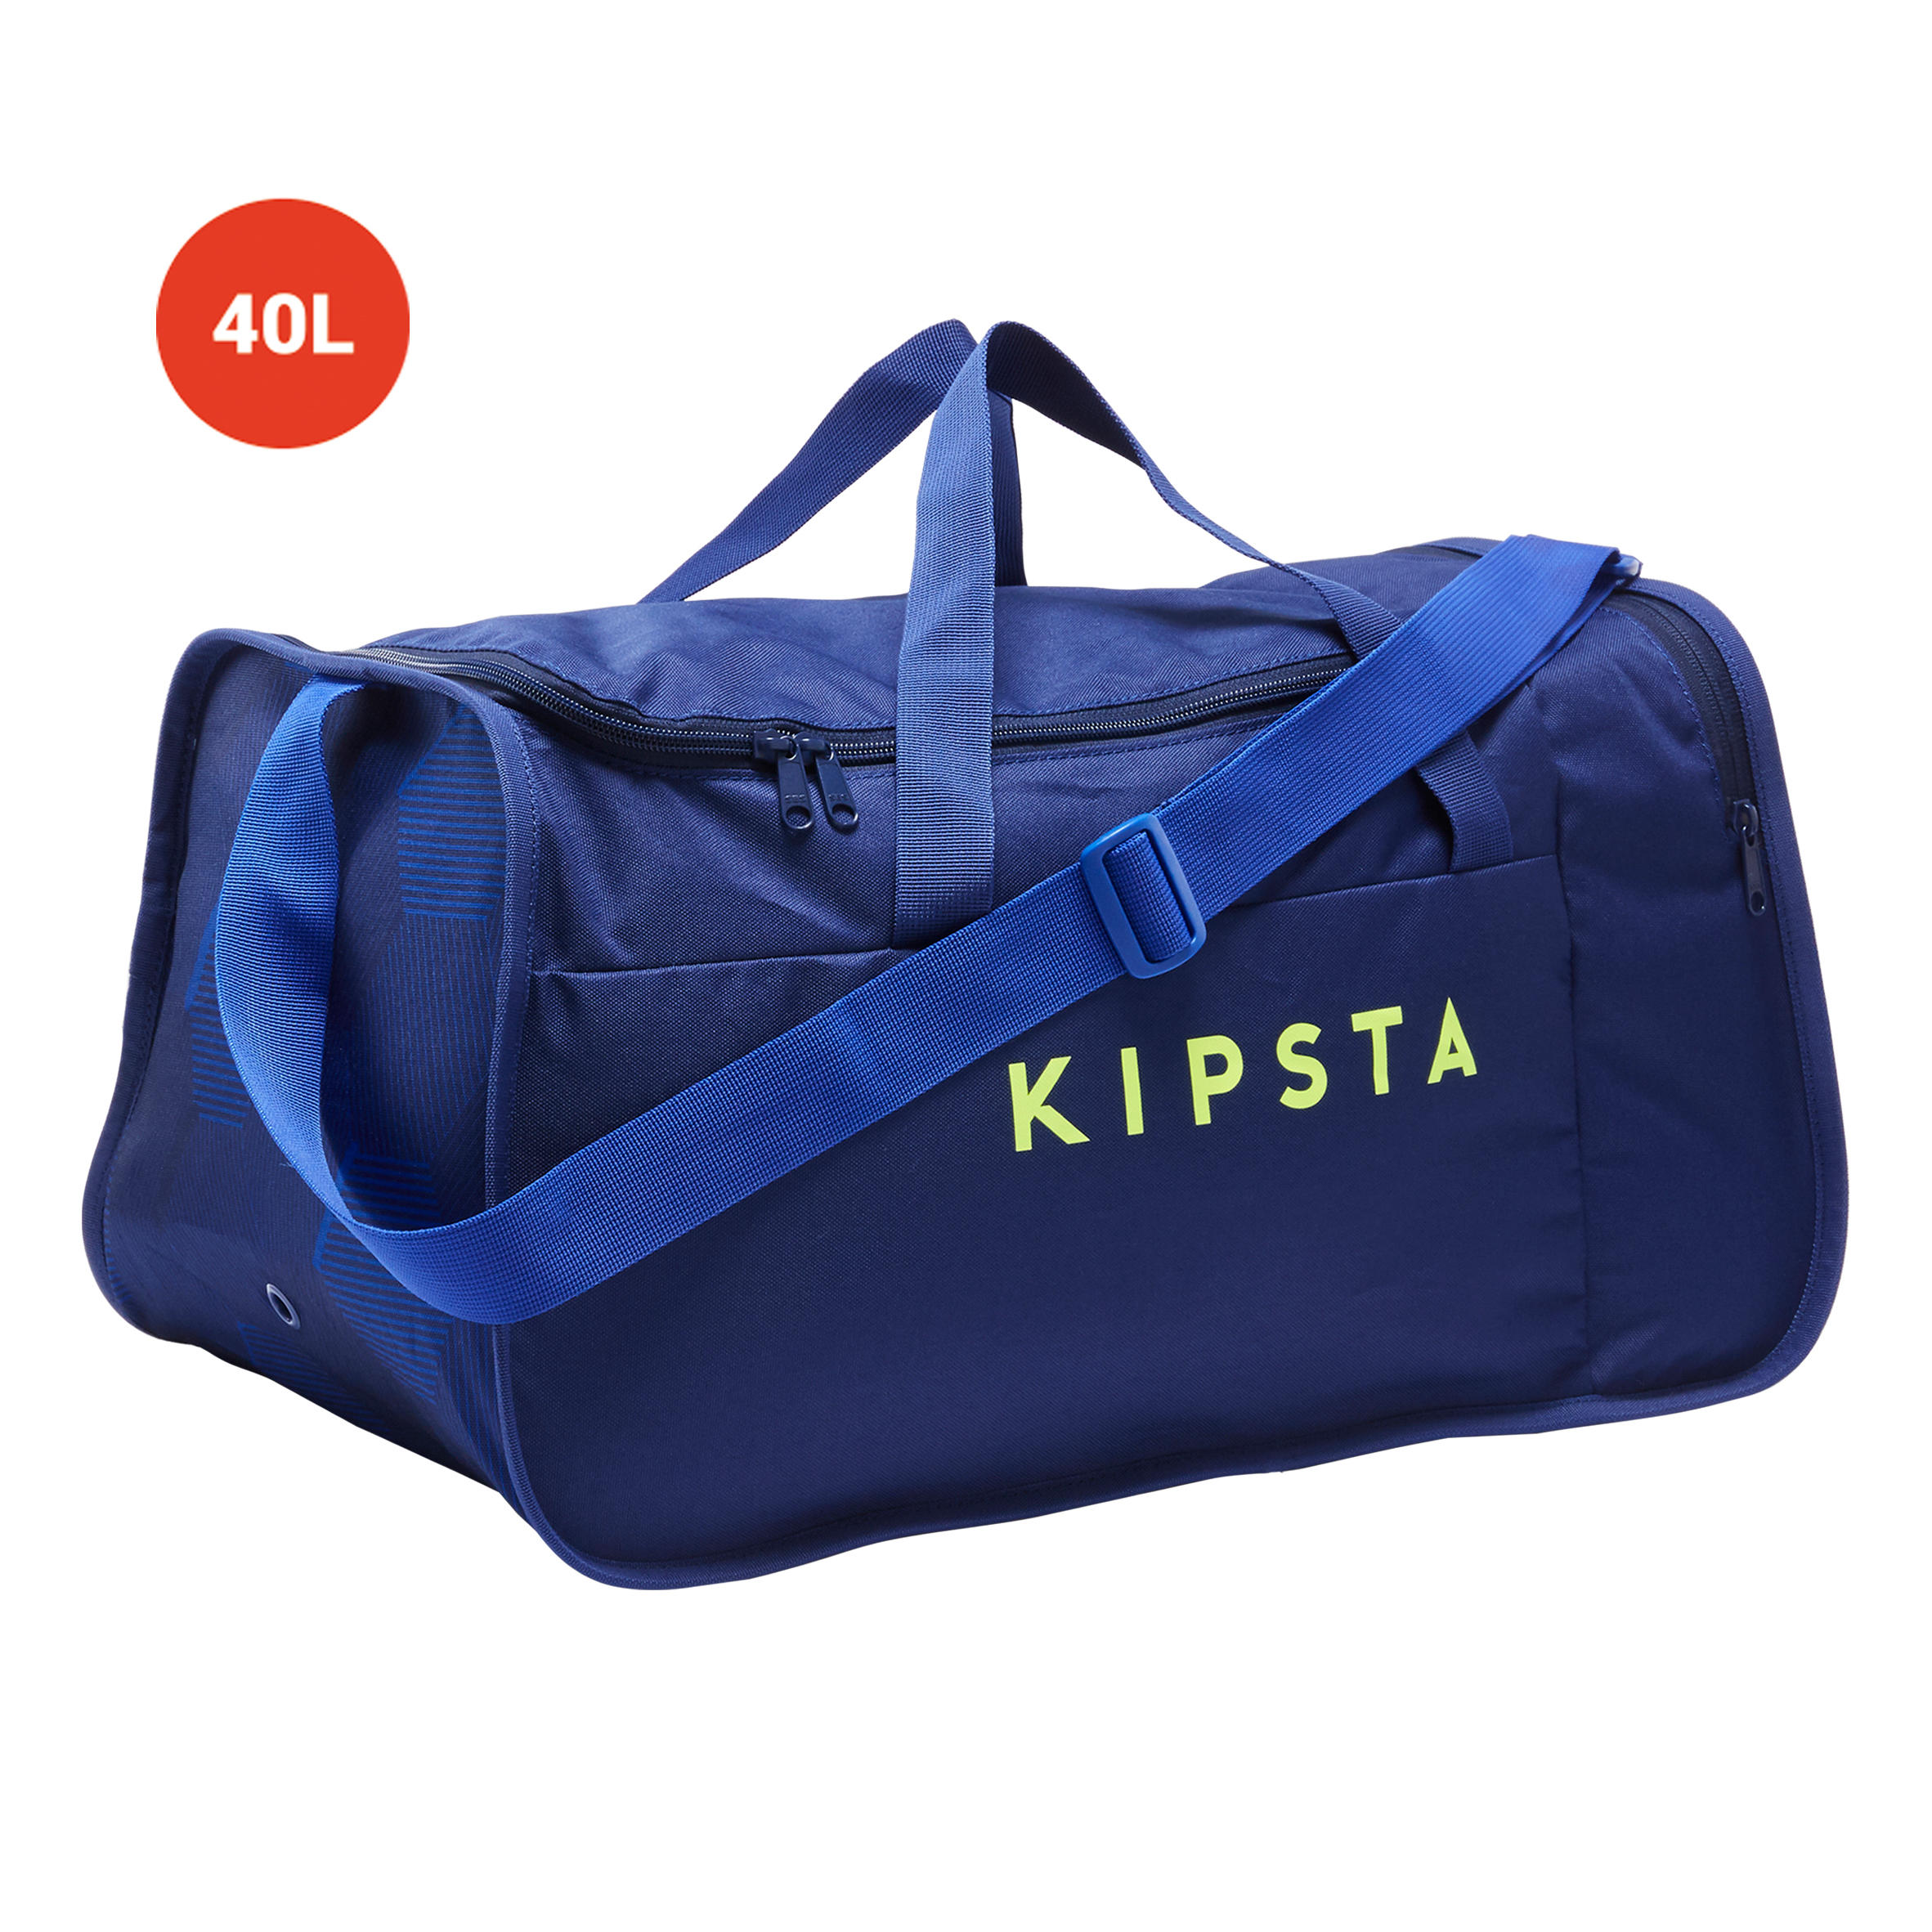 Sports Duffle Bag Kipocket 40L - Blue